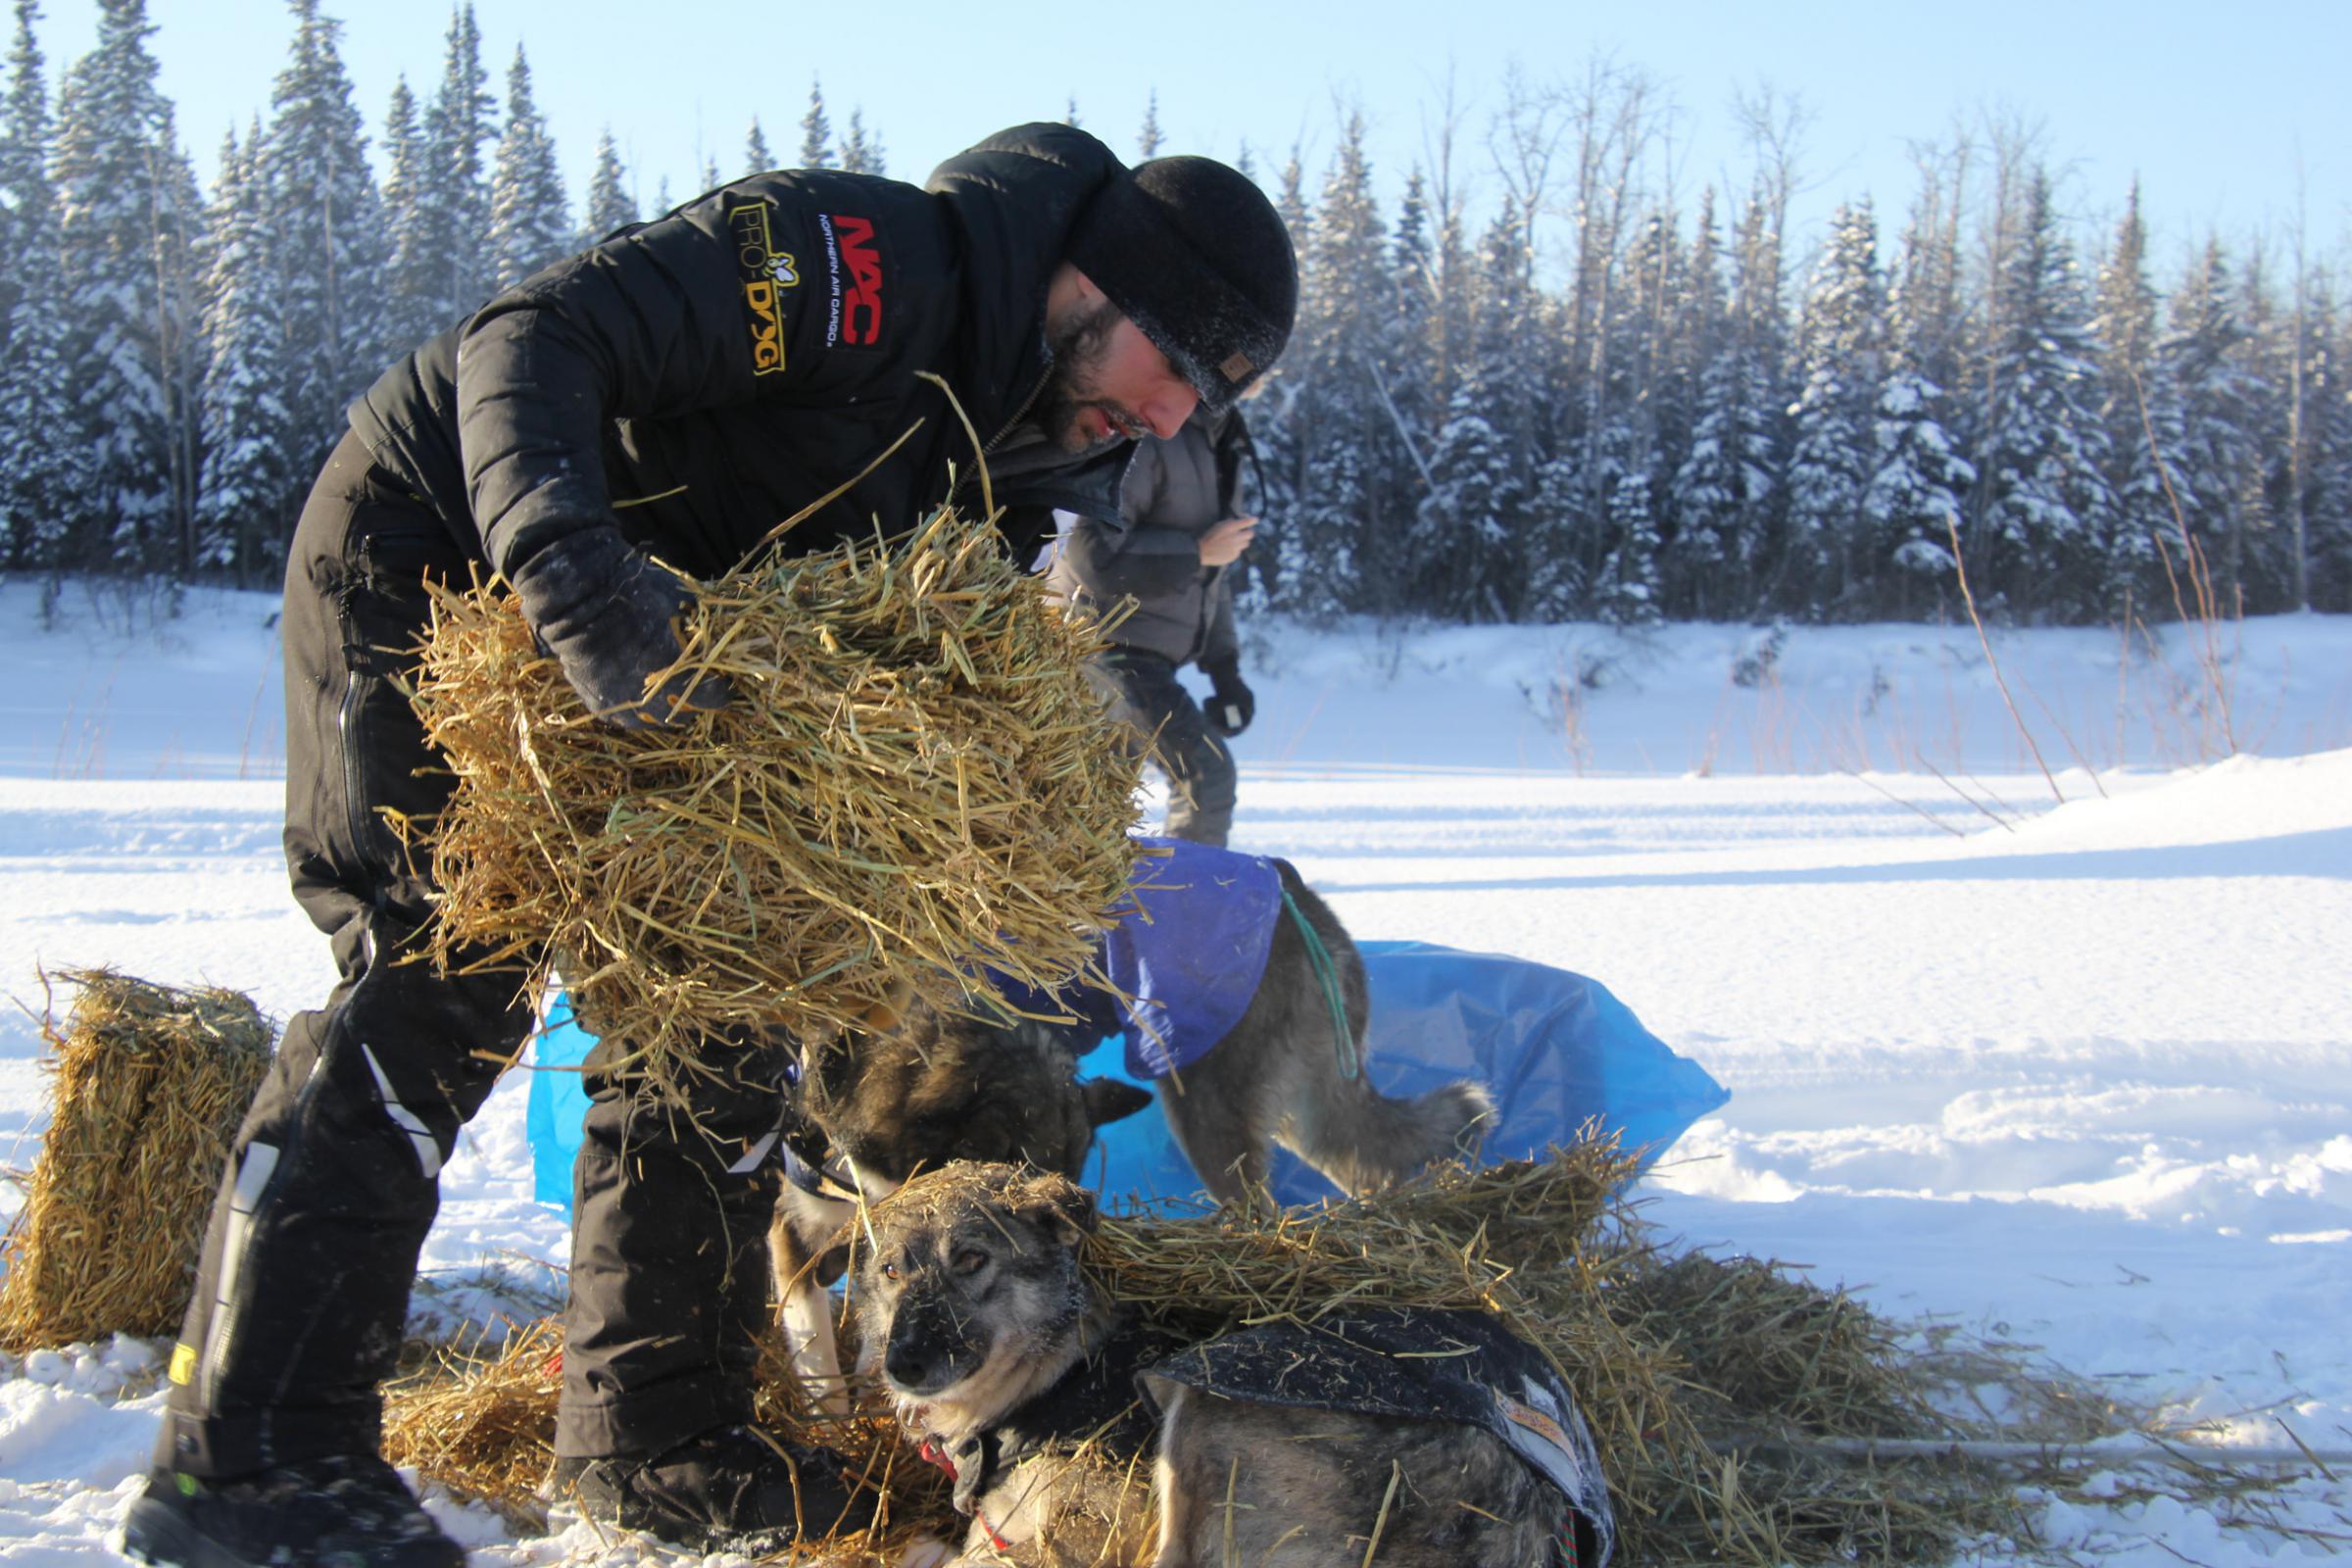 Iditarod mushers should expect deep trail snow